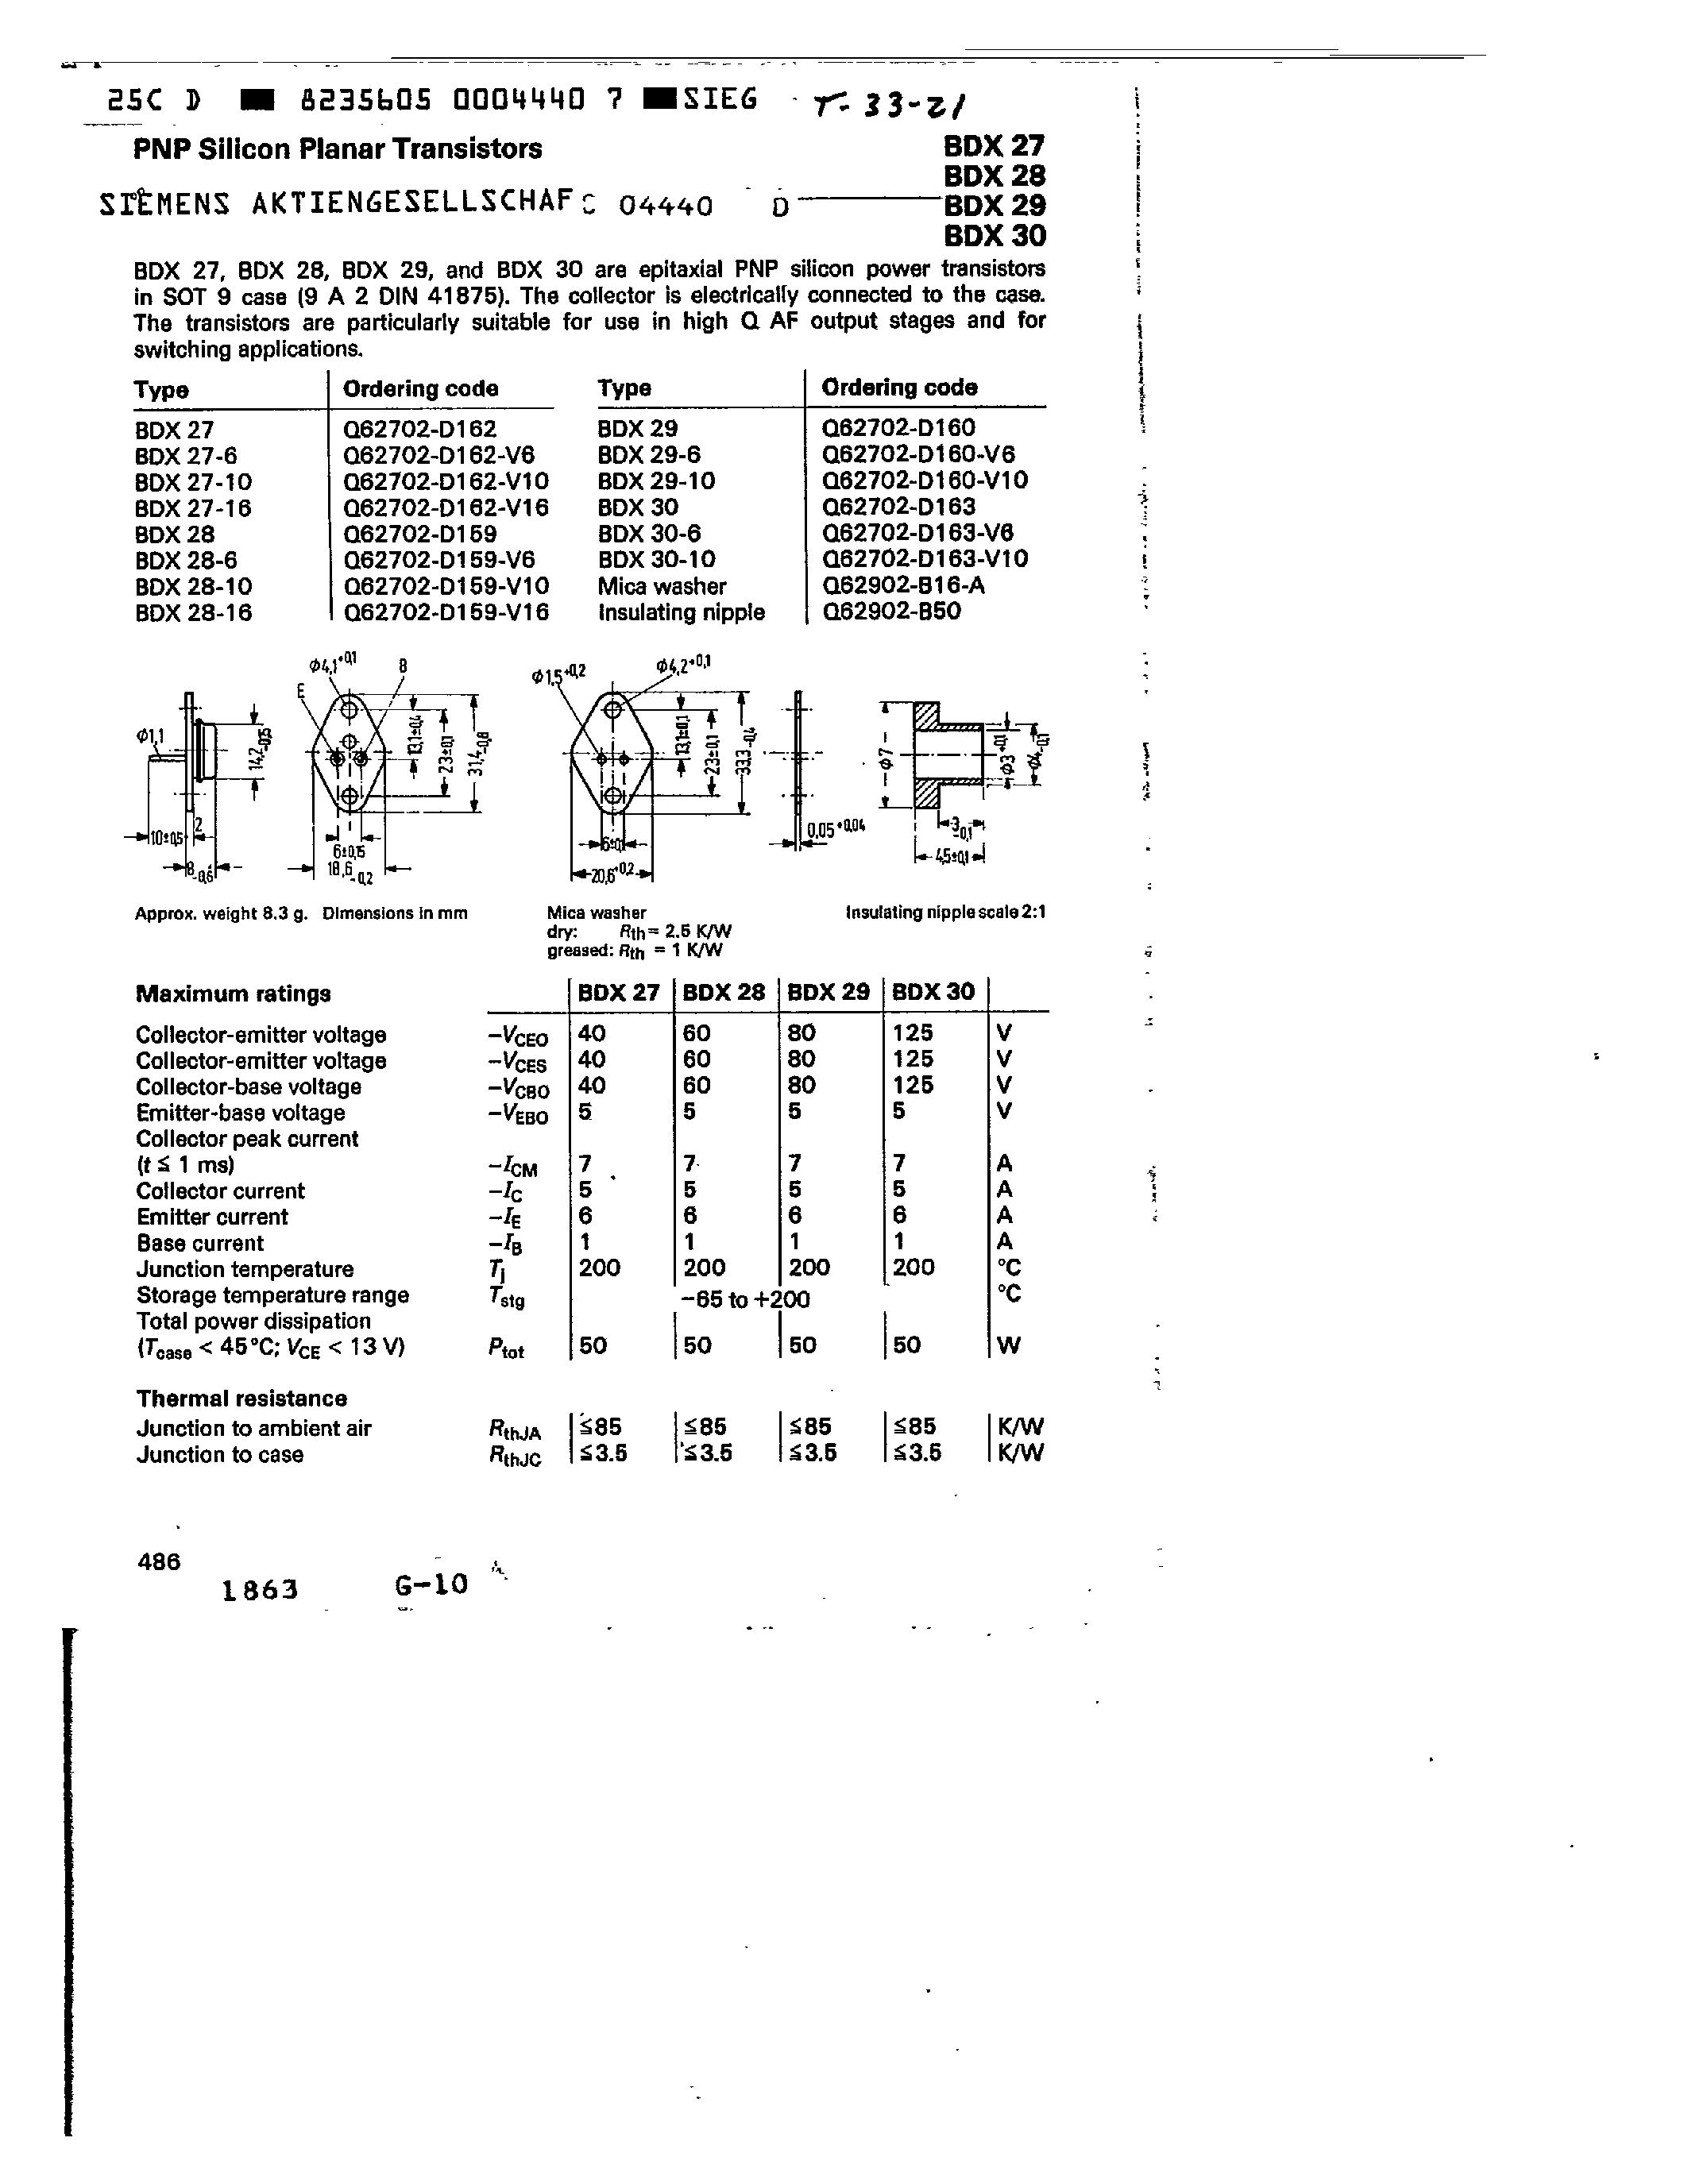 Datasheet BDX28-16 - PNP SILICON PLANAR TRANSISTORS page 1